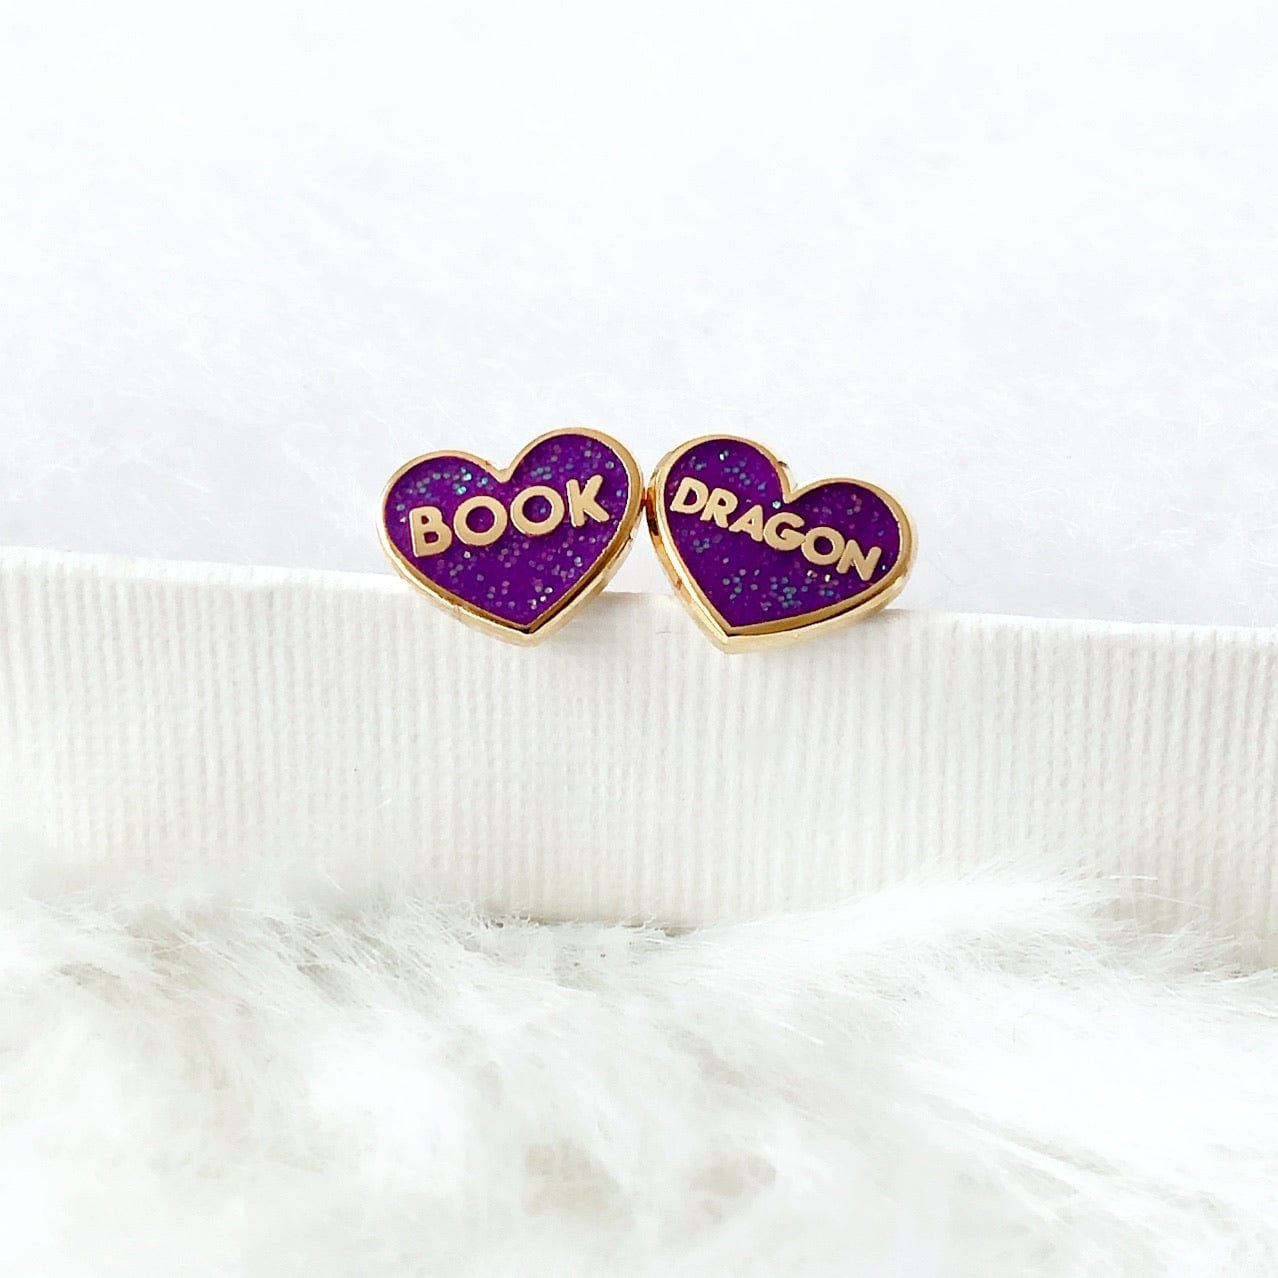 Book Dragon Earrings